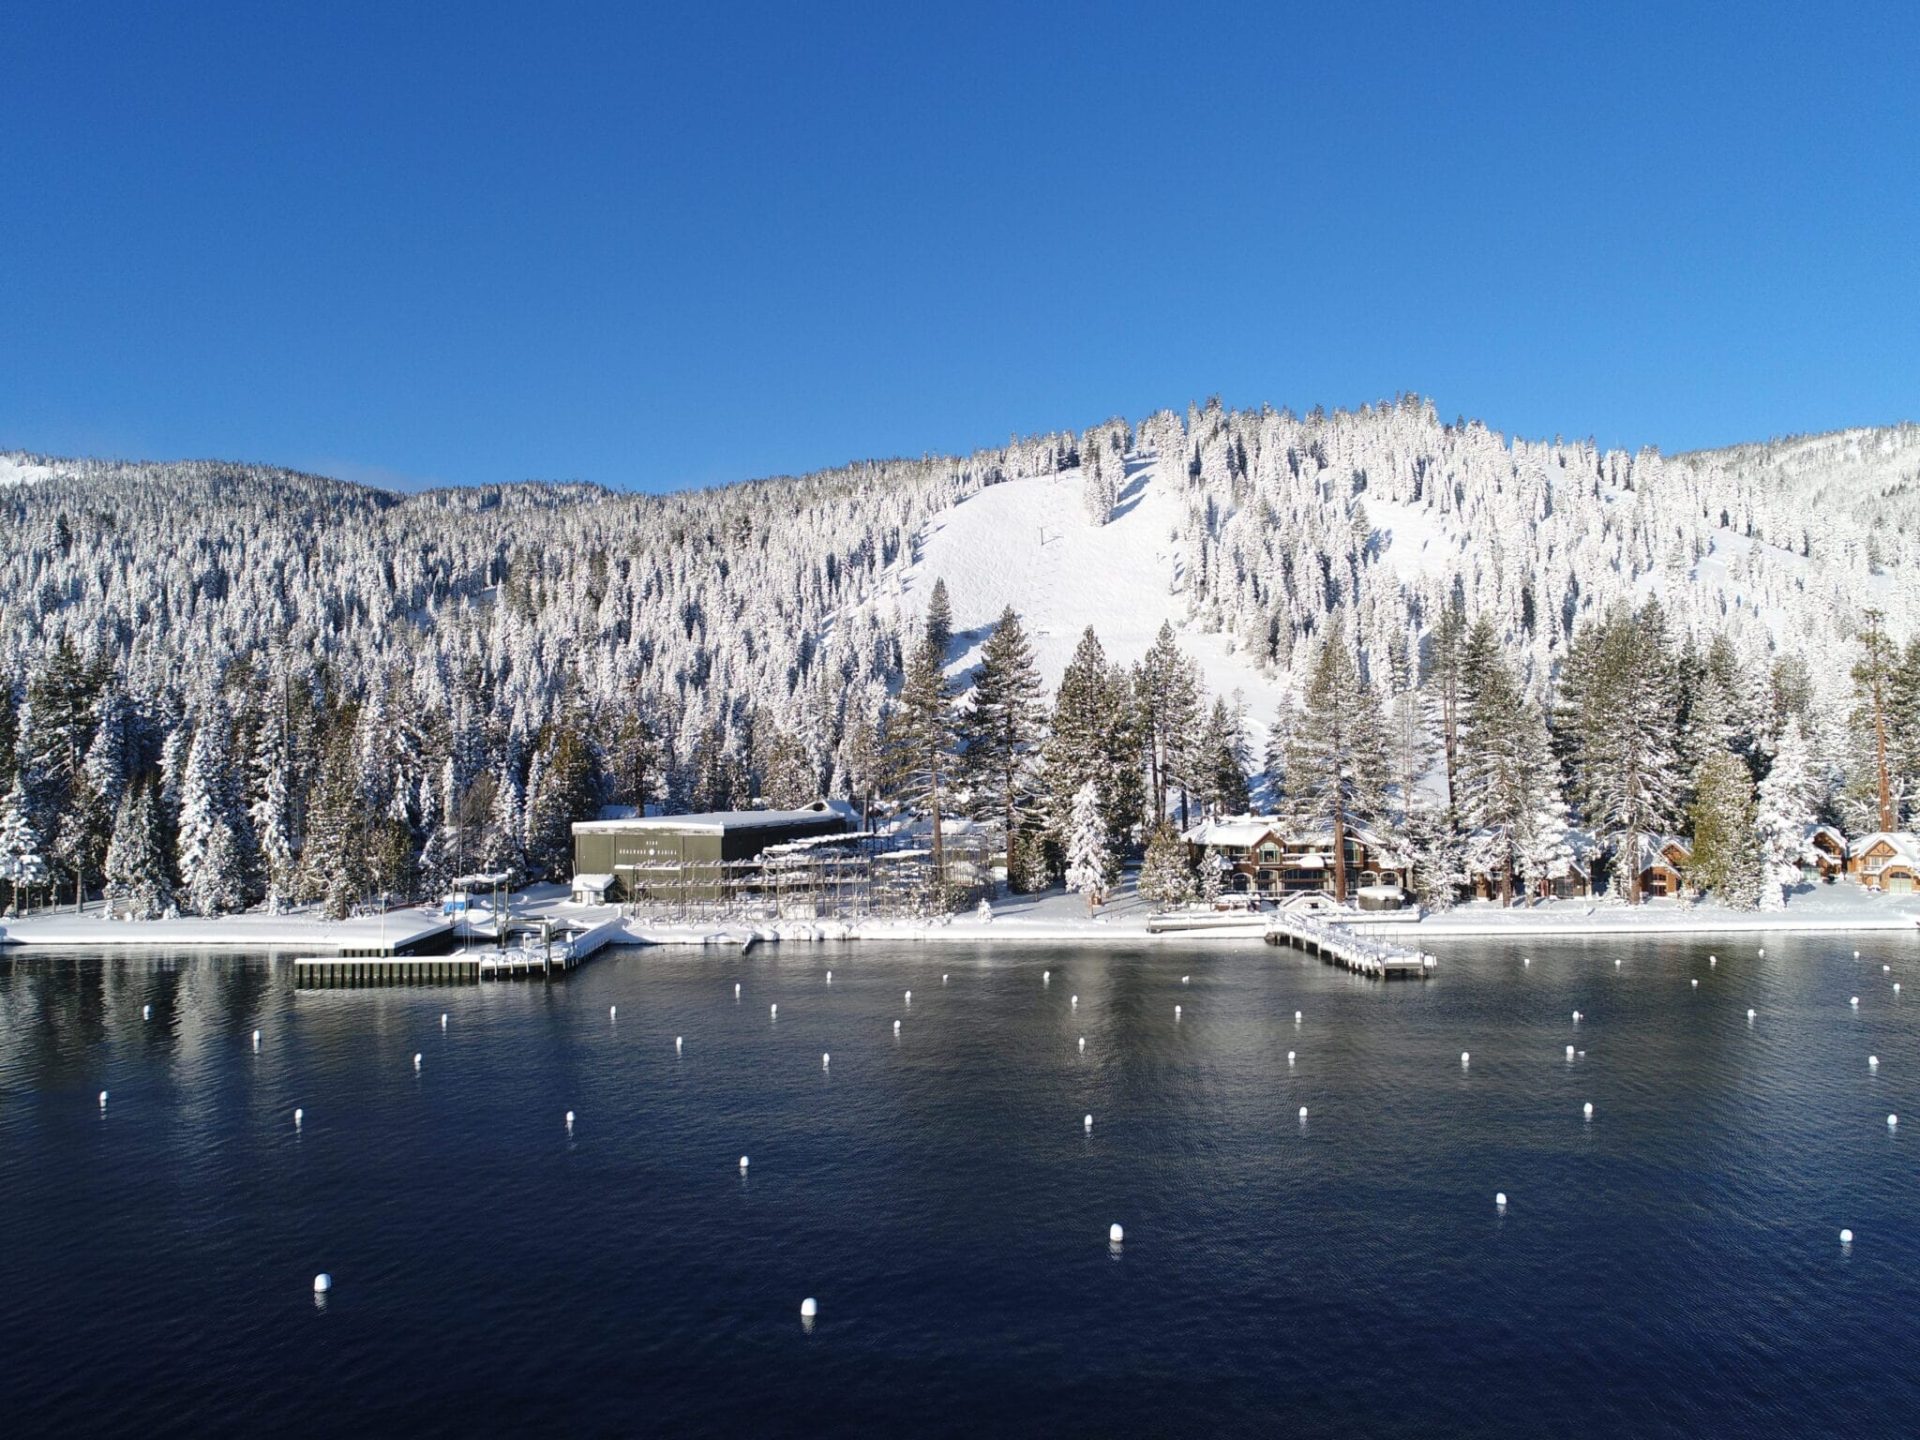 Homewood ski area rises up above Lake Tahoe.